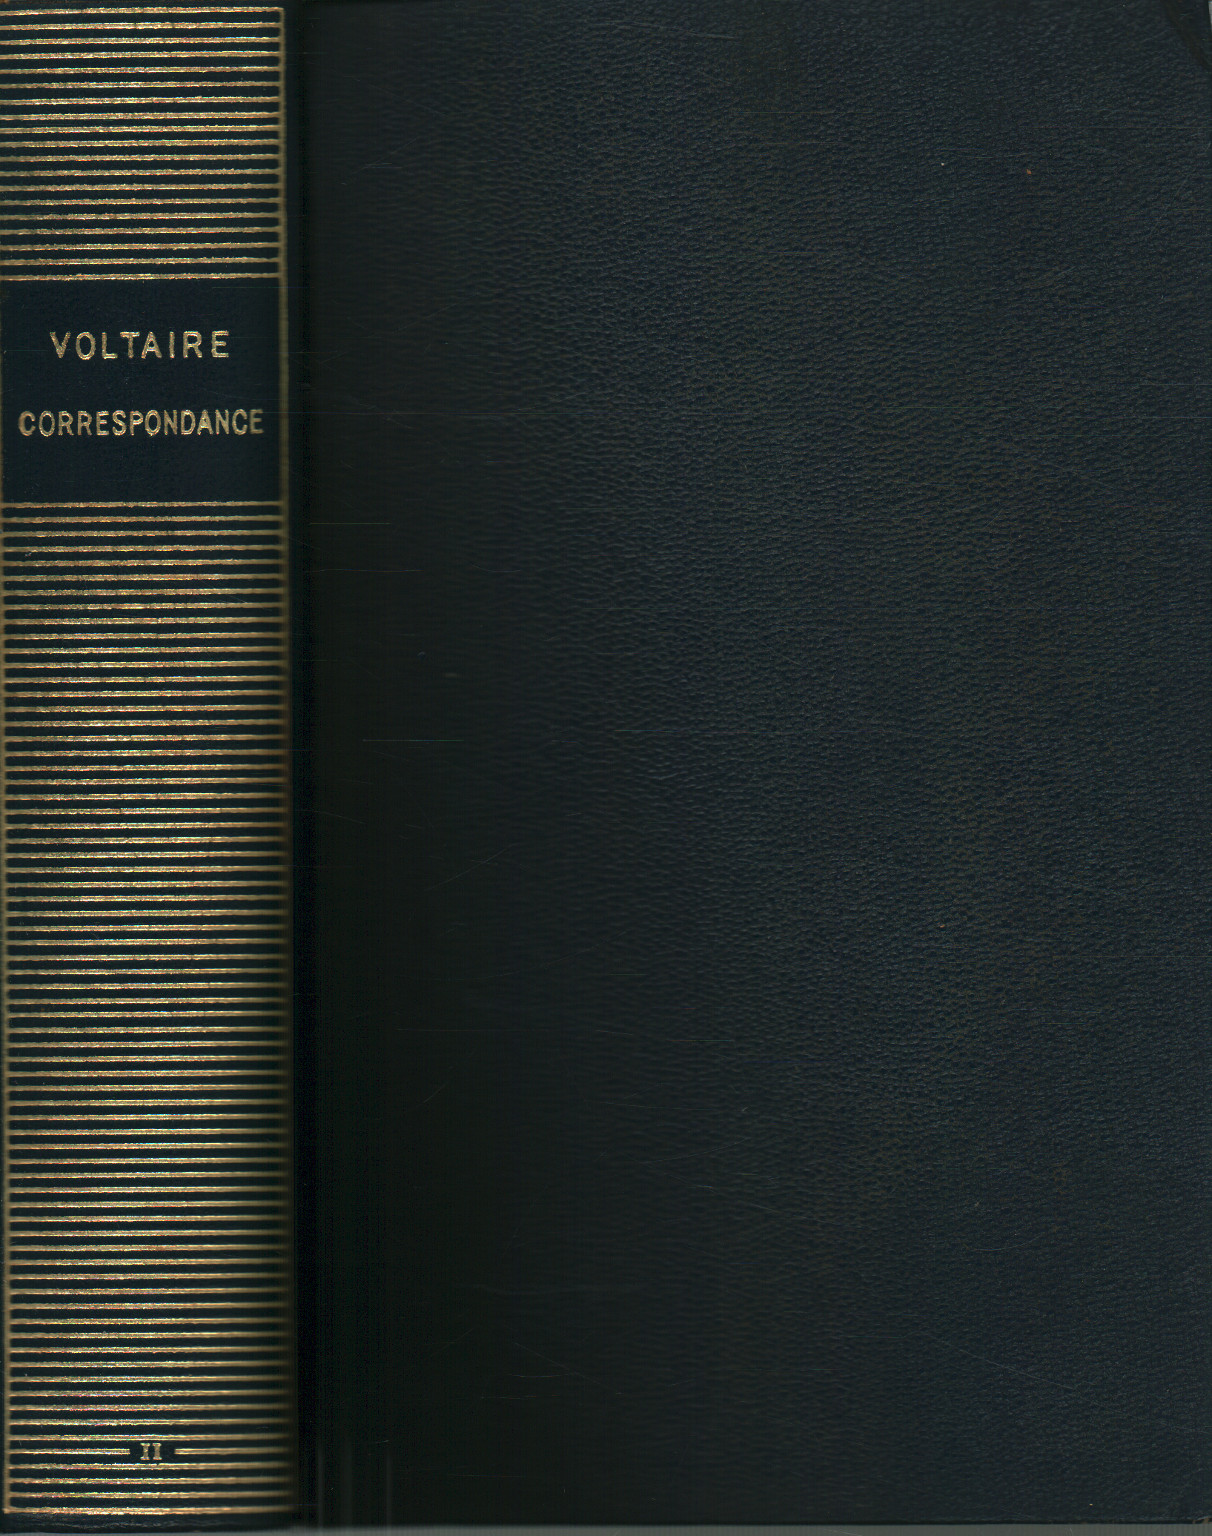 Corrispondance de Voltaire (tomo II), s.a.